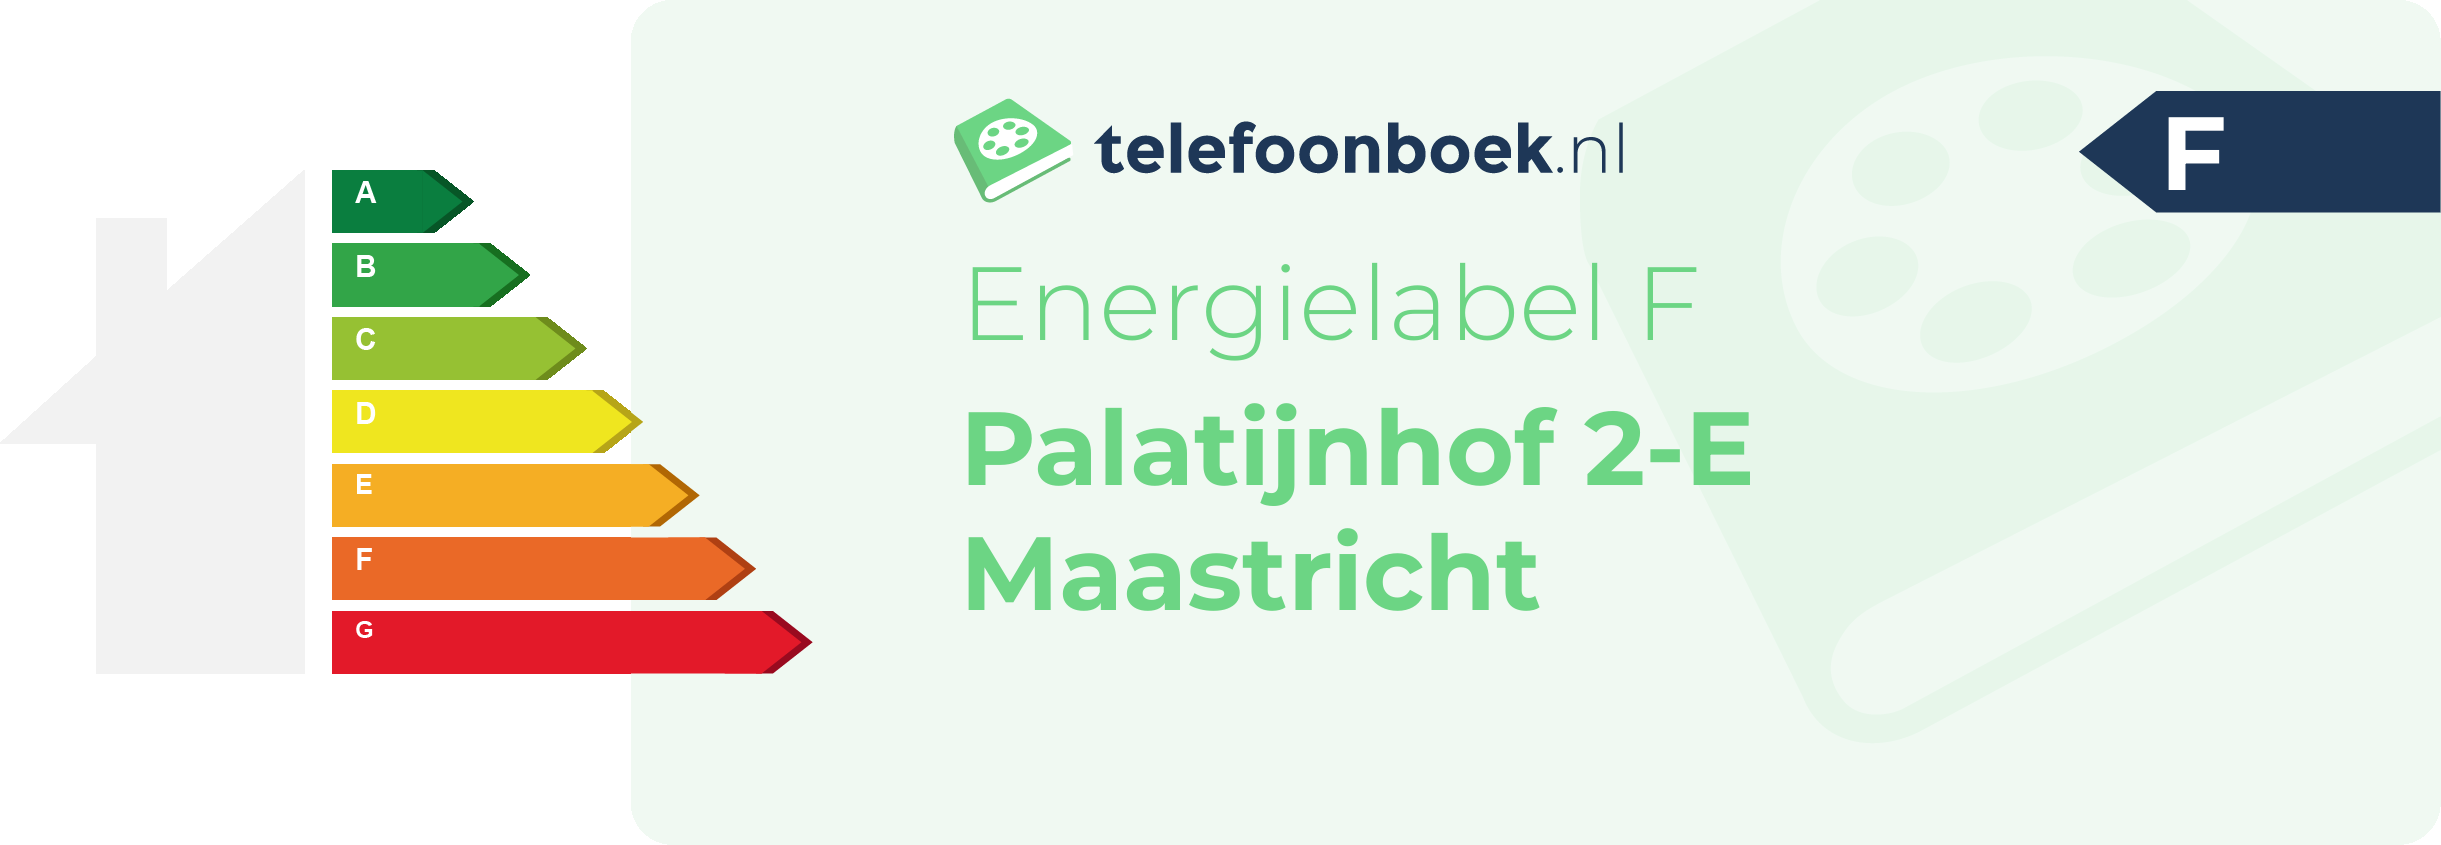 Energielabel Palatijnhof 2-E Maastricht